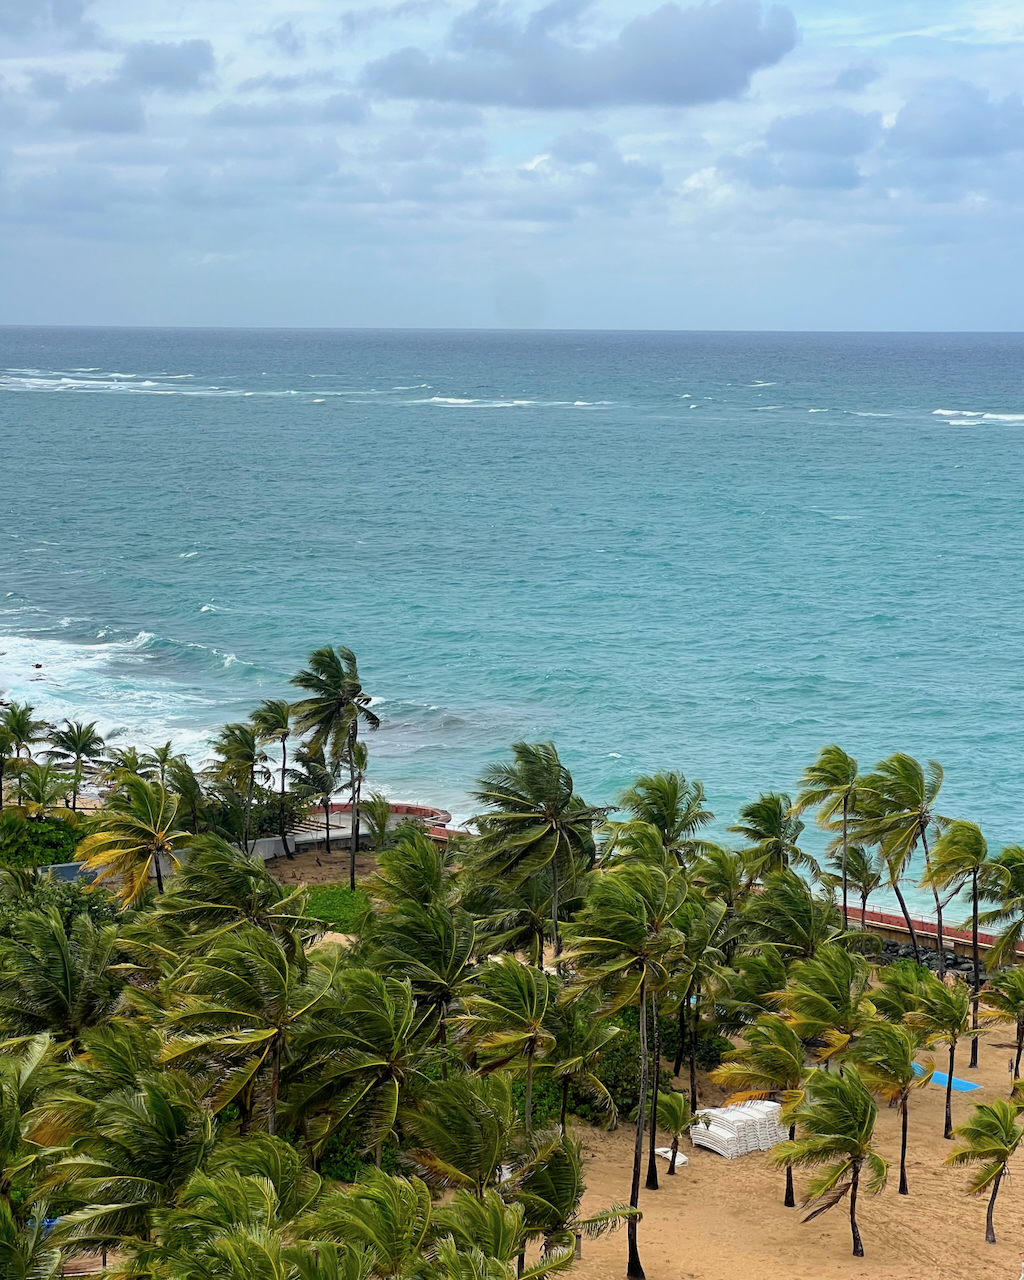 San Juan, Puerto Rico Travel Guide: 6 Day Itinerary